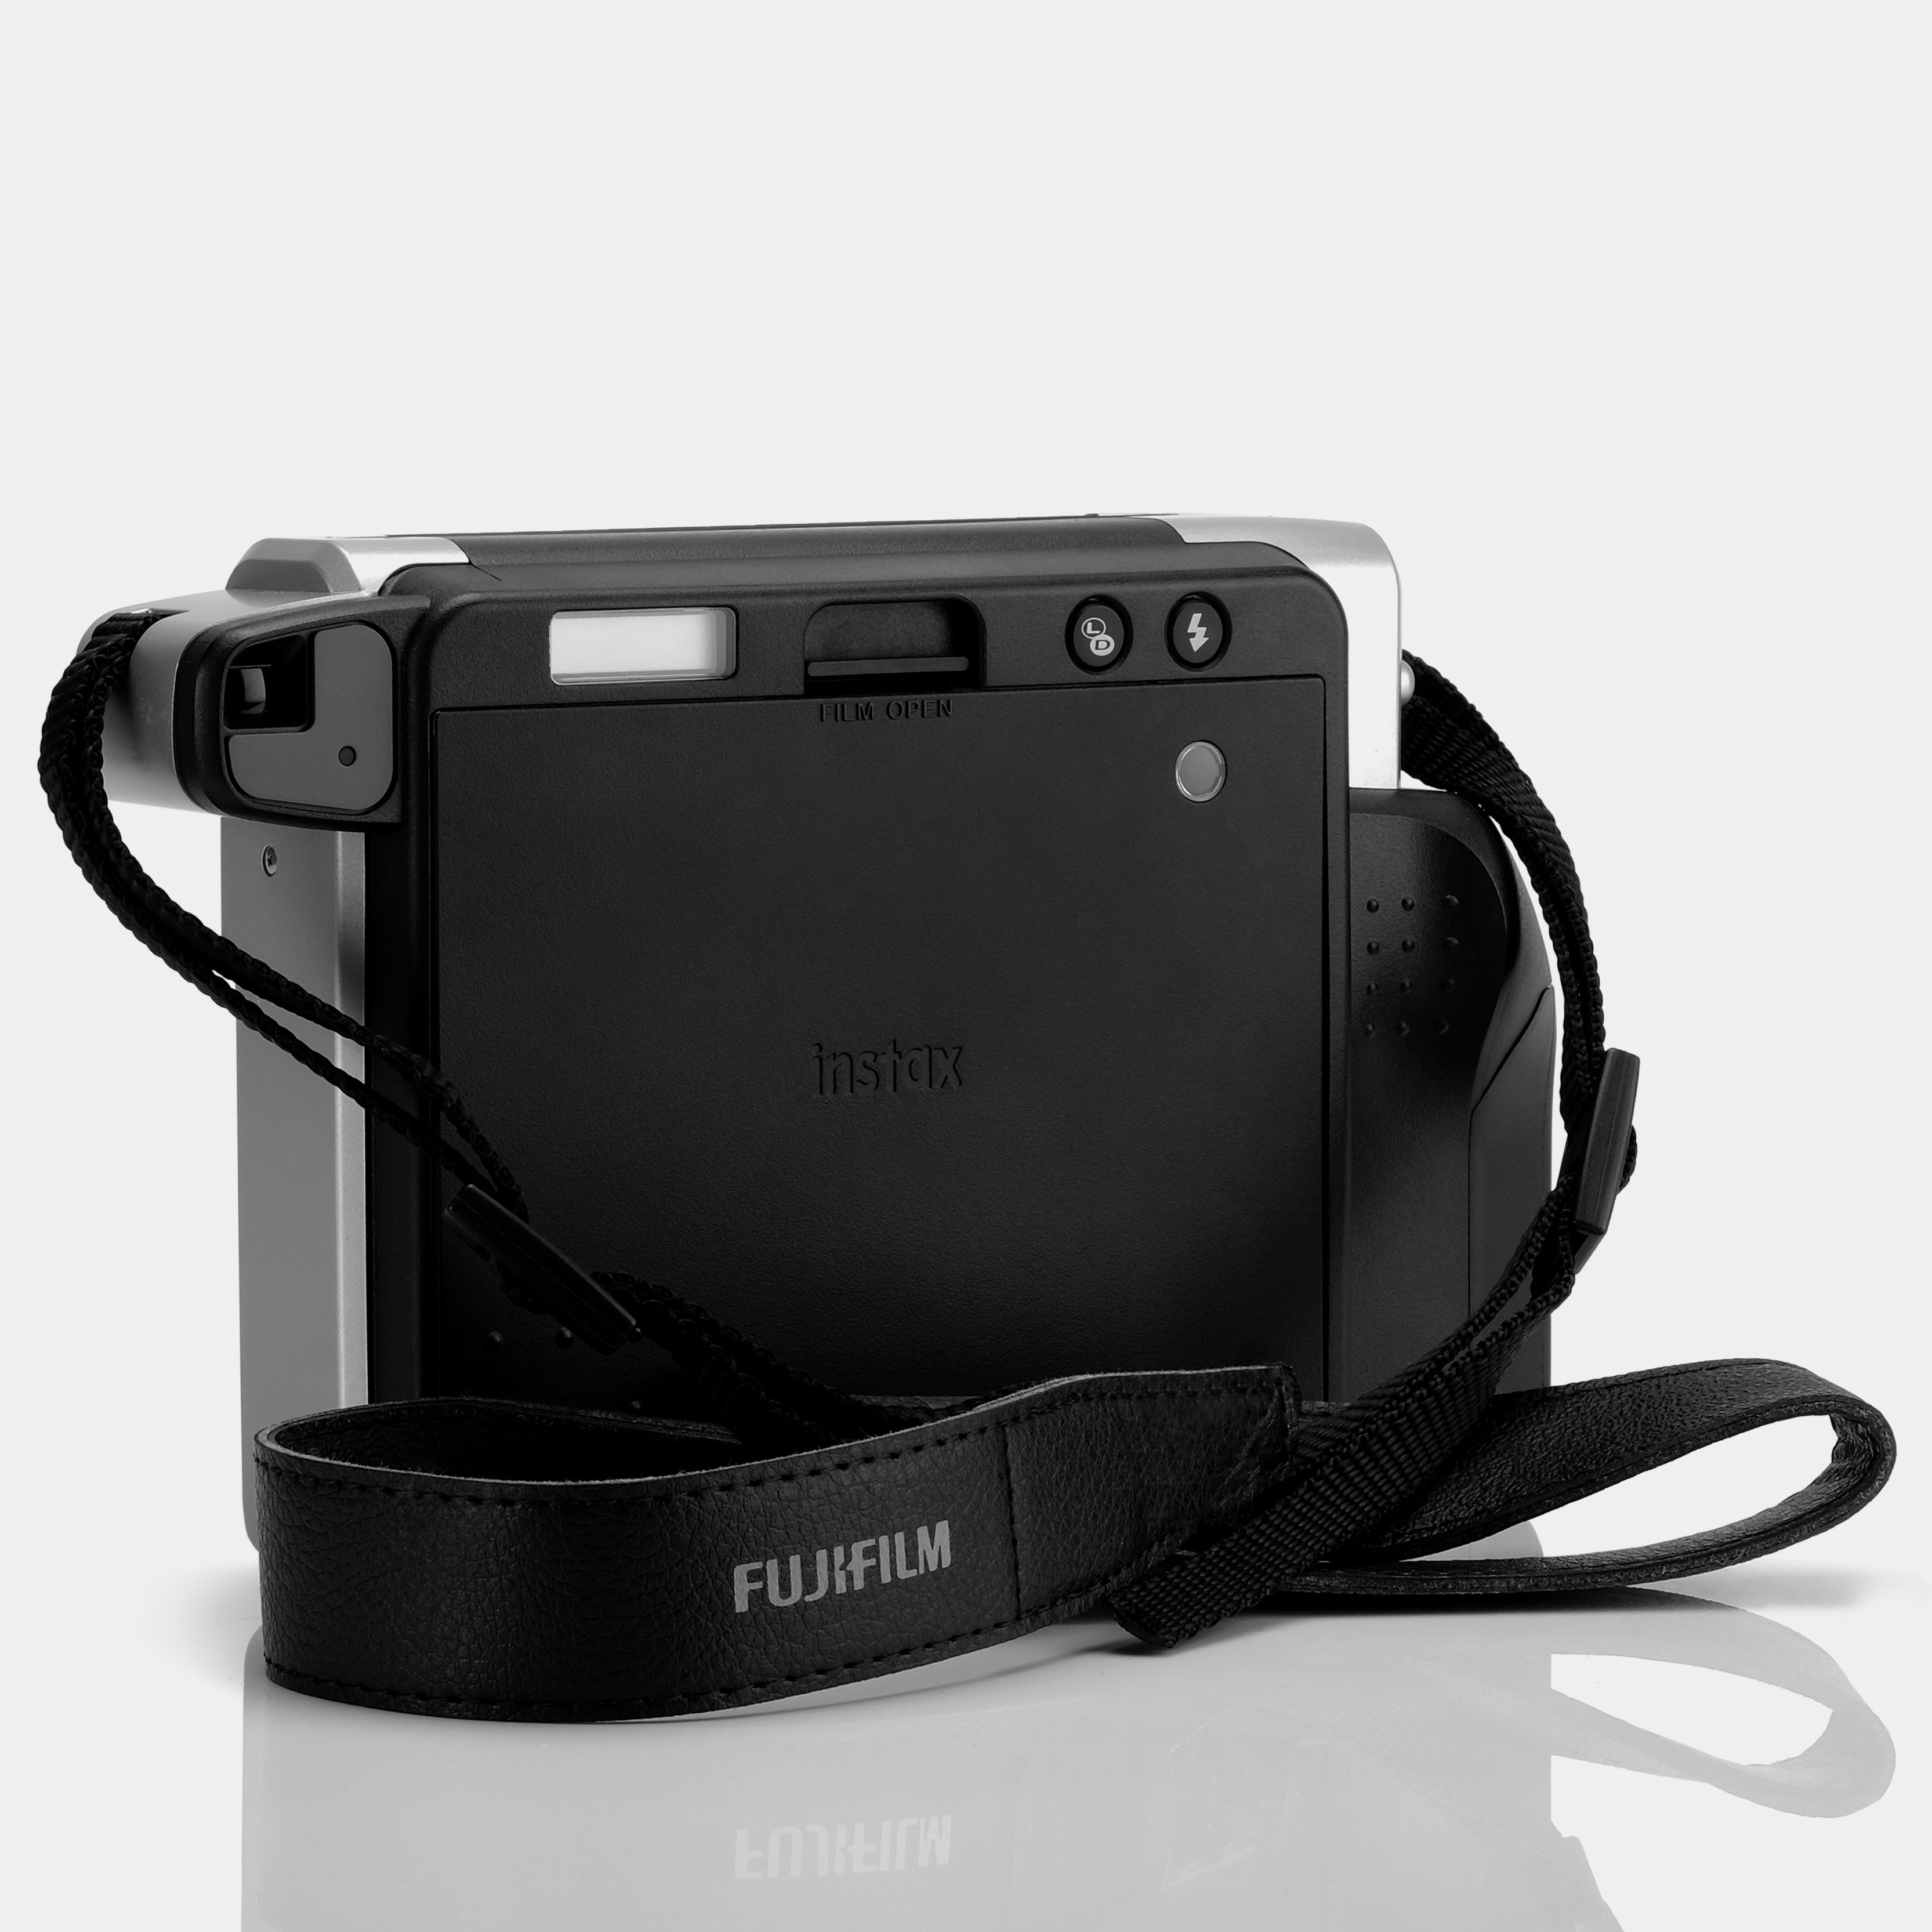 Fujifilm Instax WIDE 300 Black Instant Film Camera - Refurbished